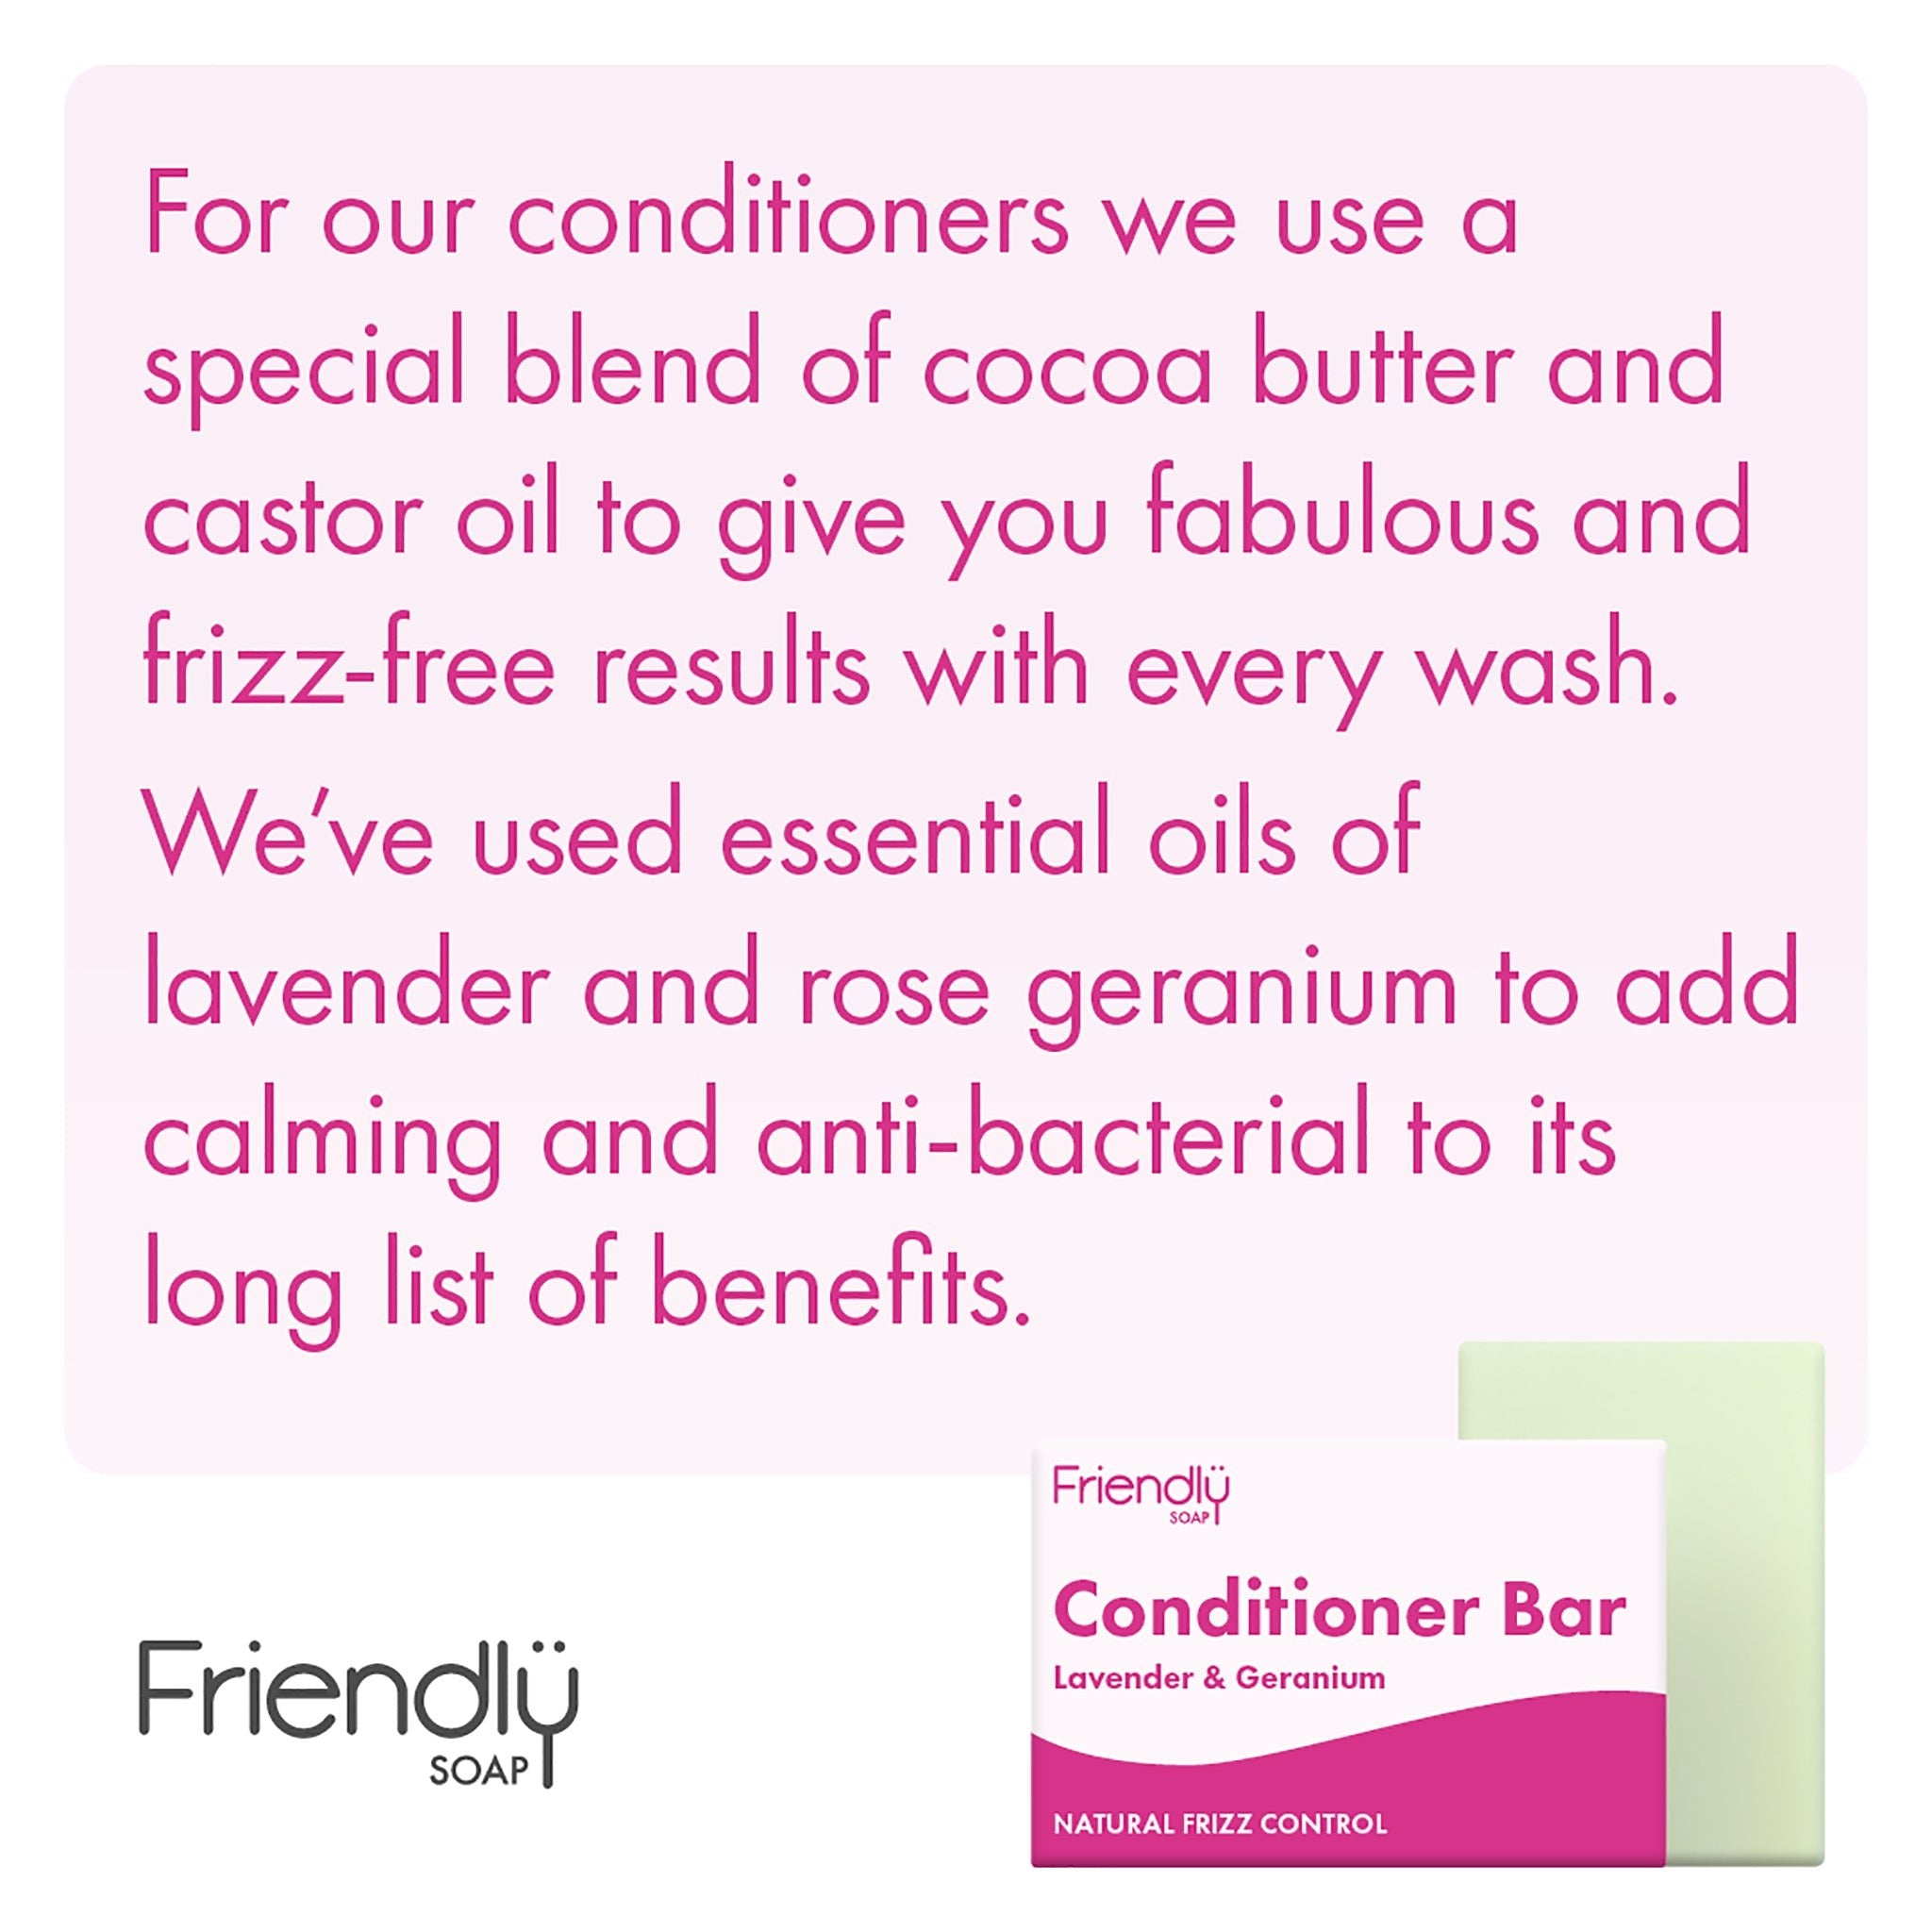 Healthy Shine Conditioner Bar - Lavender & Geranium - mypure.co.uk